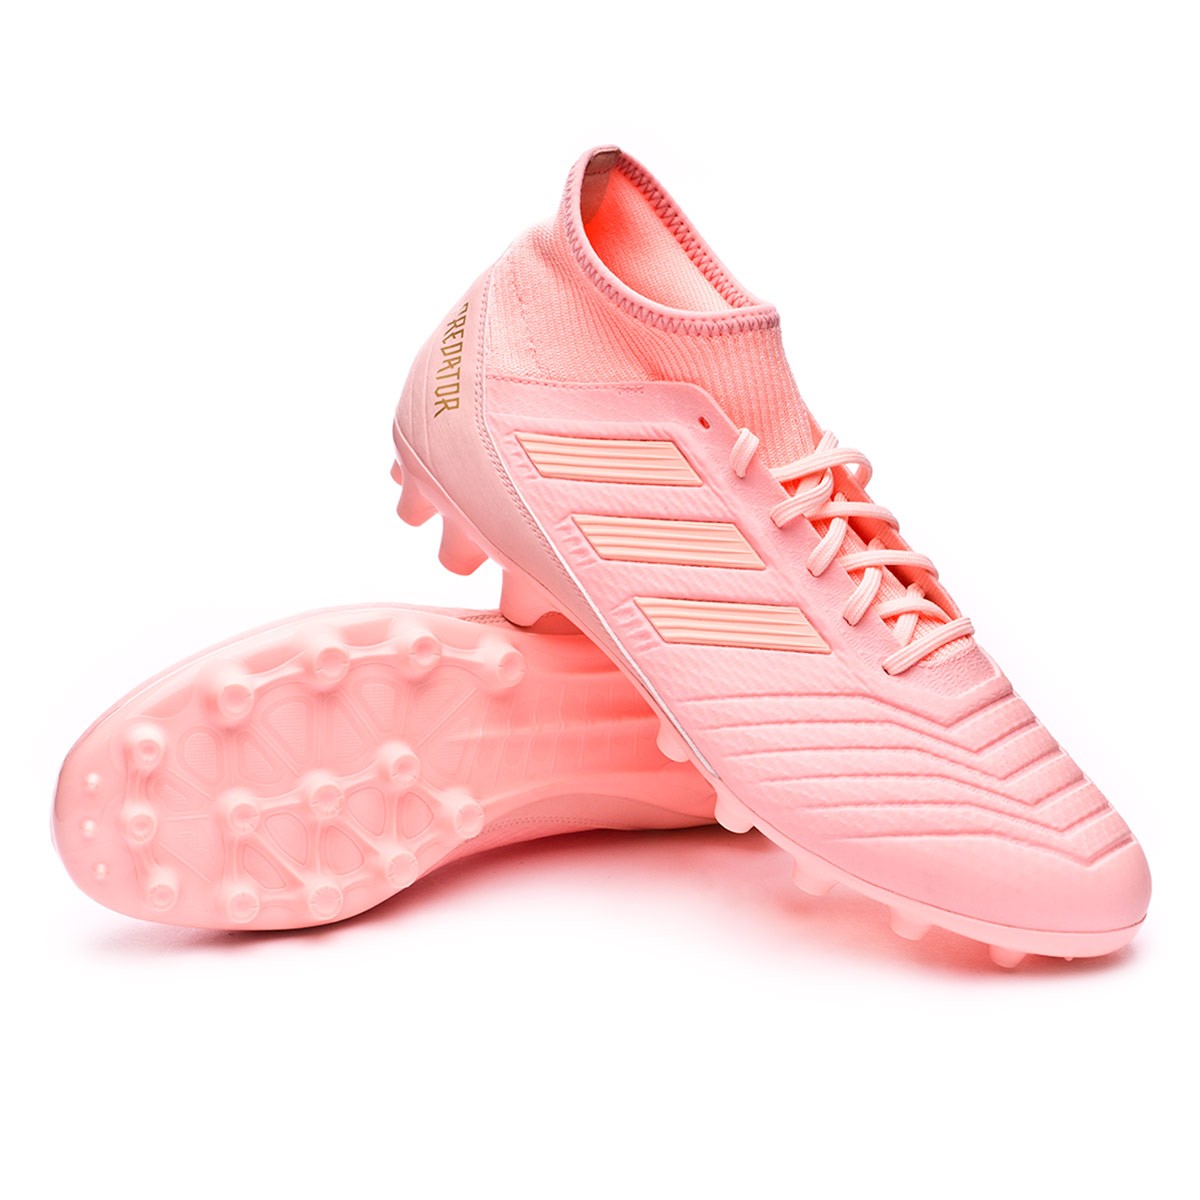 Football Boots adidas Predator 18.3 AG Clear orange-Trace pink - Football  store Fútbol Emotion